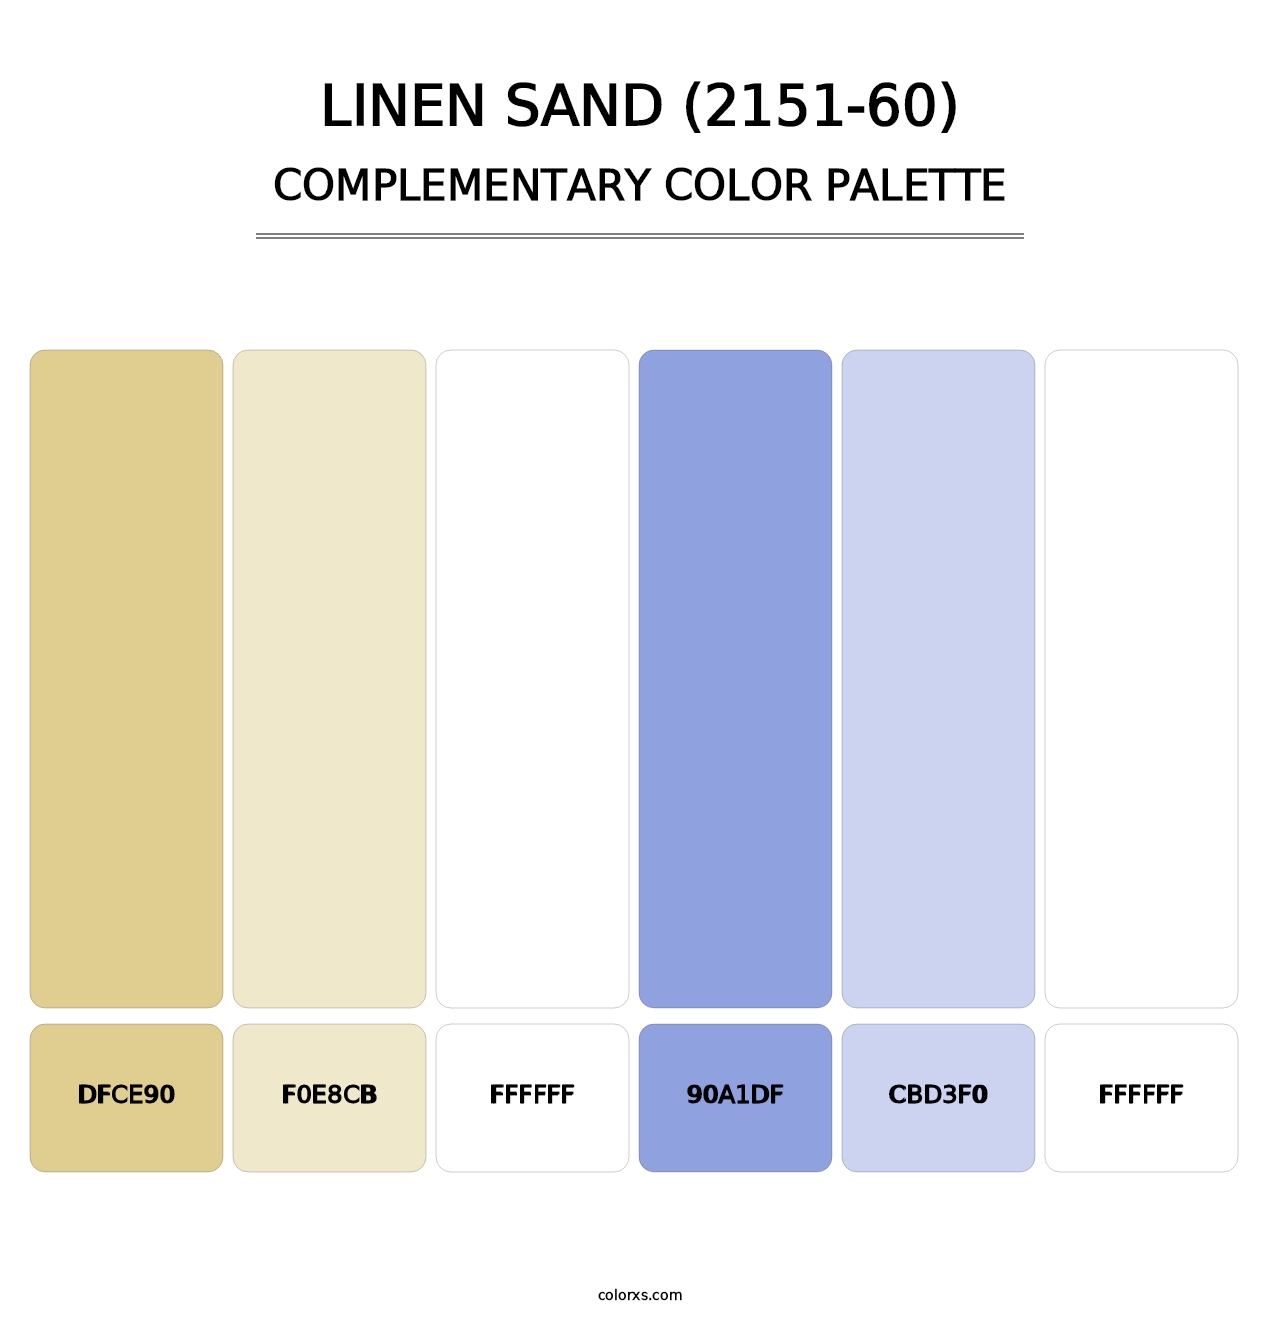 Linen Sand (2151-60) - Complementary Color Palette